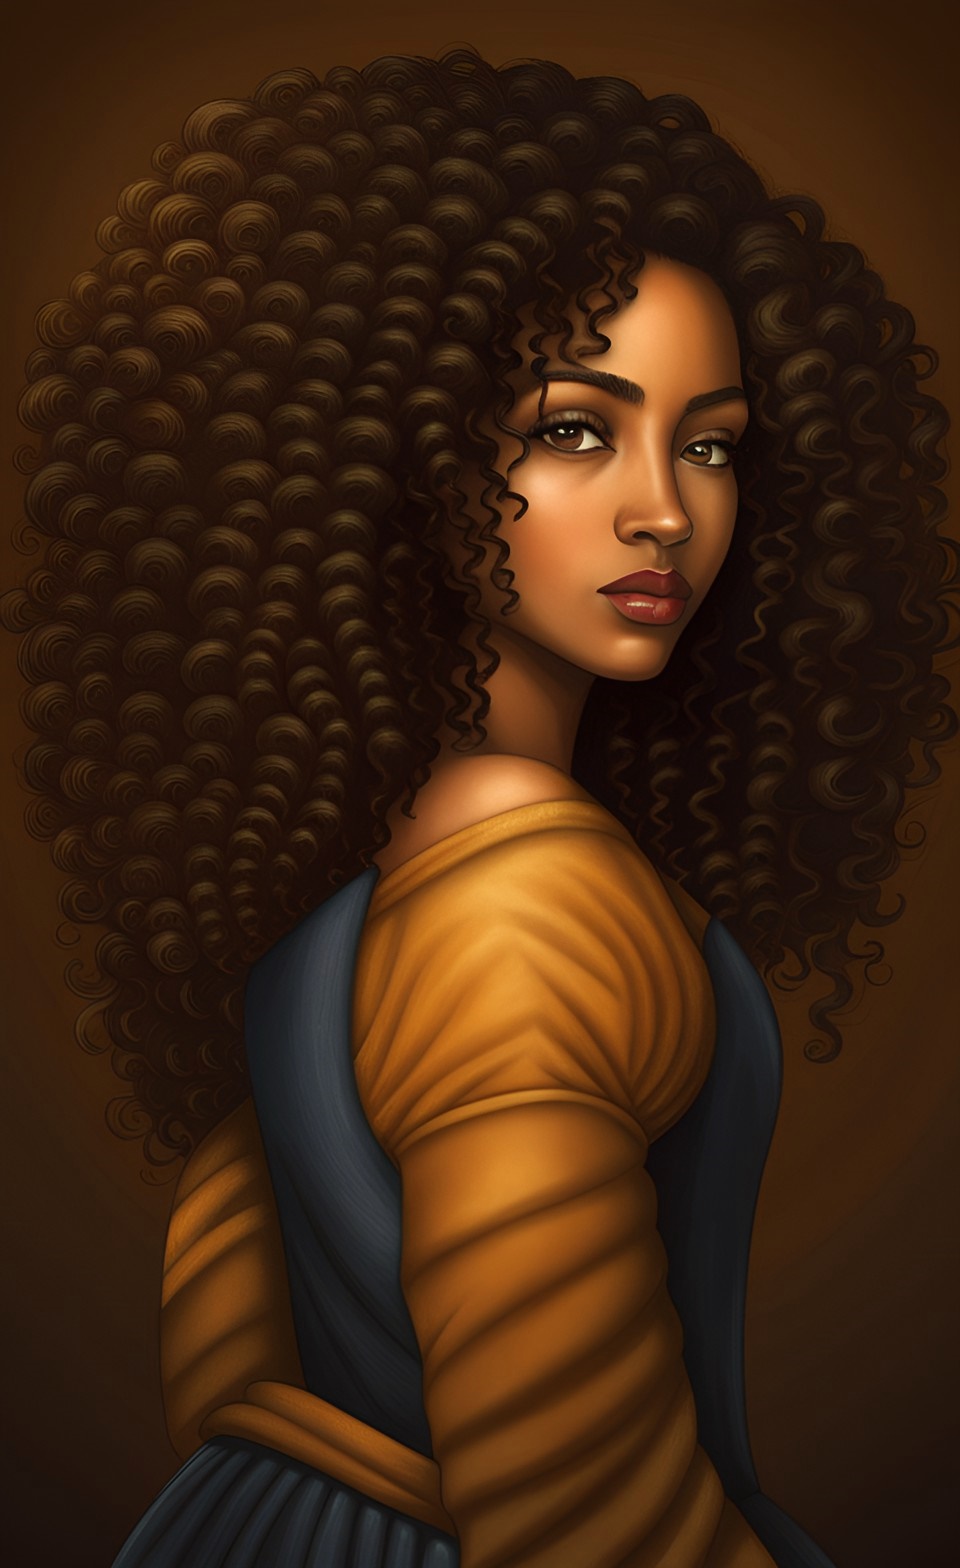 Beautiful art work of mixed-race women Dreamc19